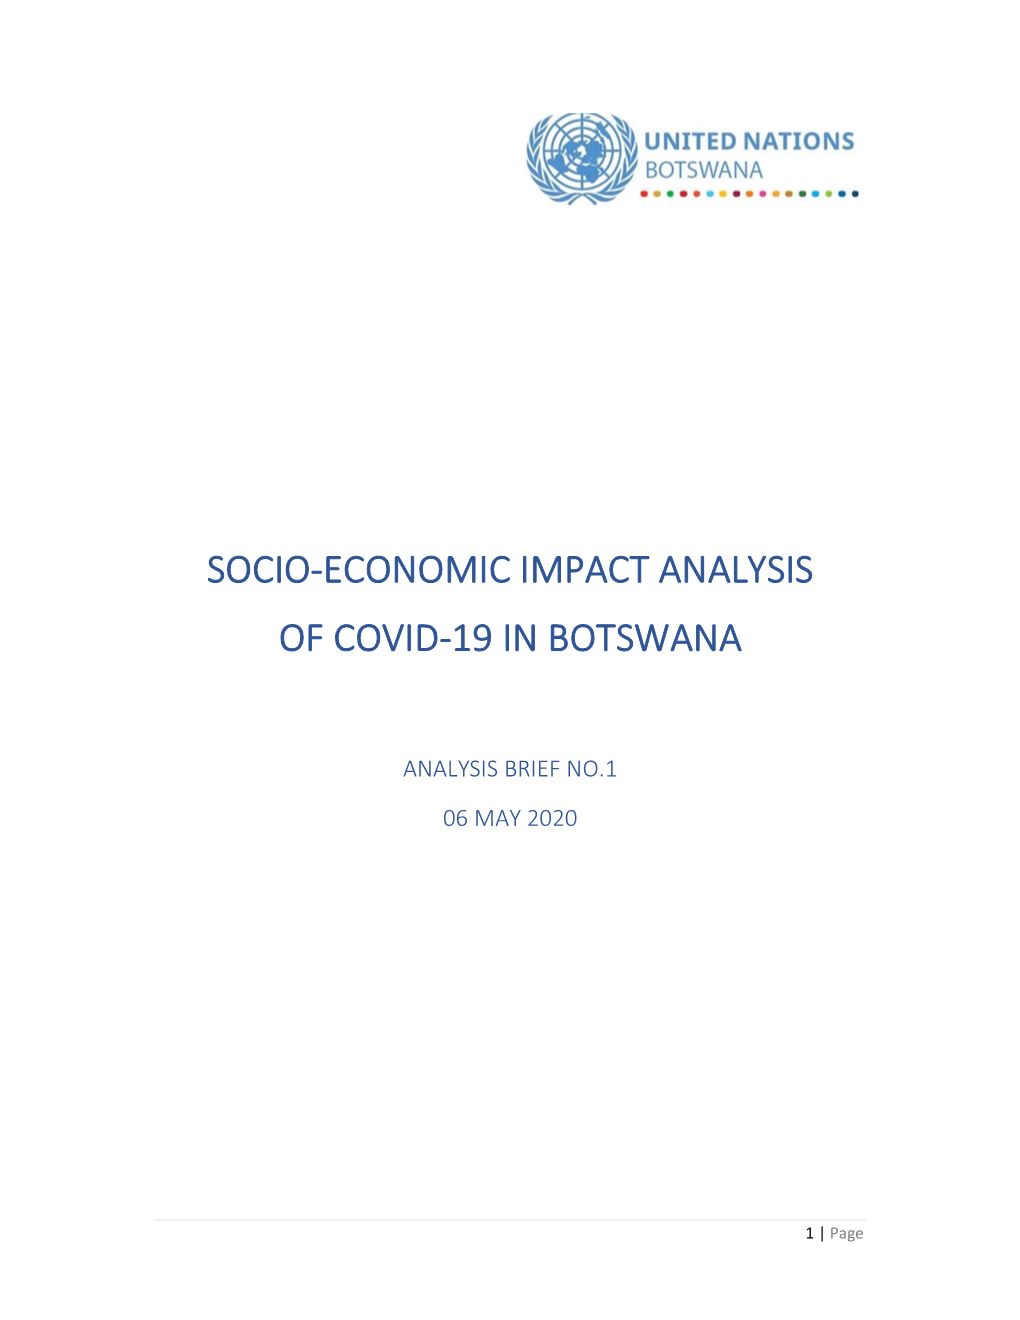 Botswana Socio-Economic Analysis of the Impact of COVID-19 Brief 1